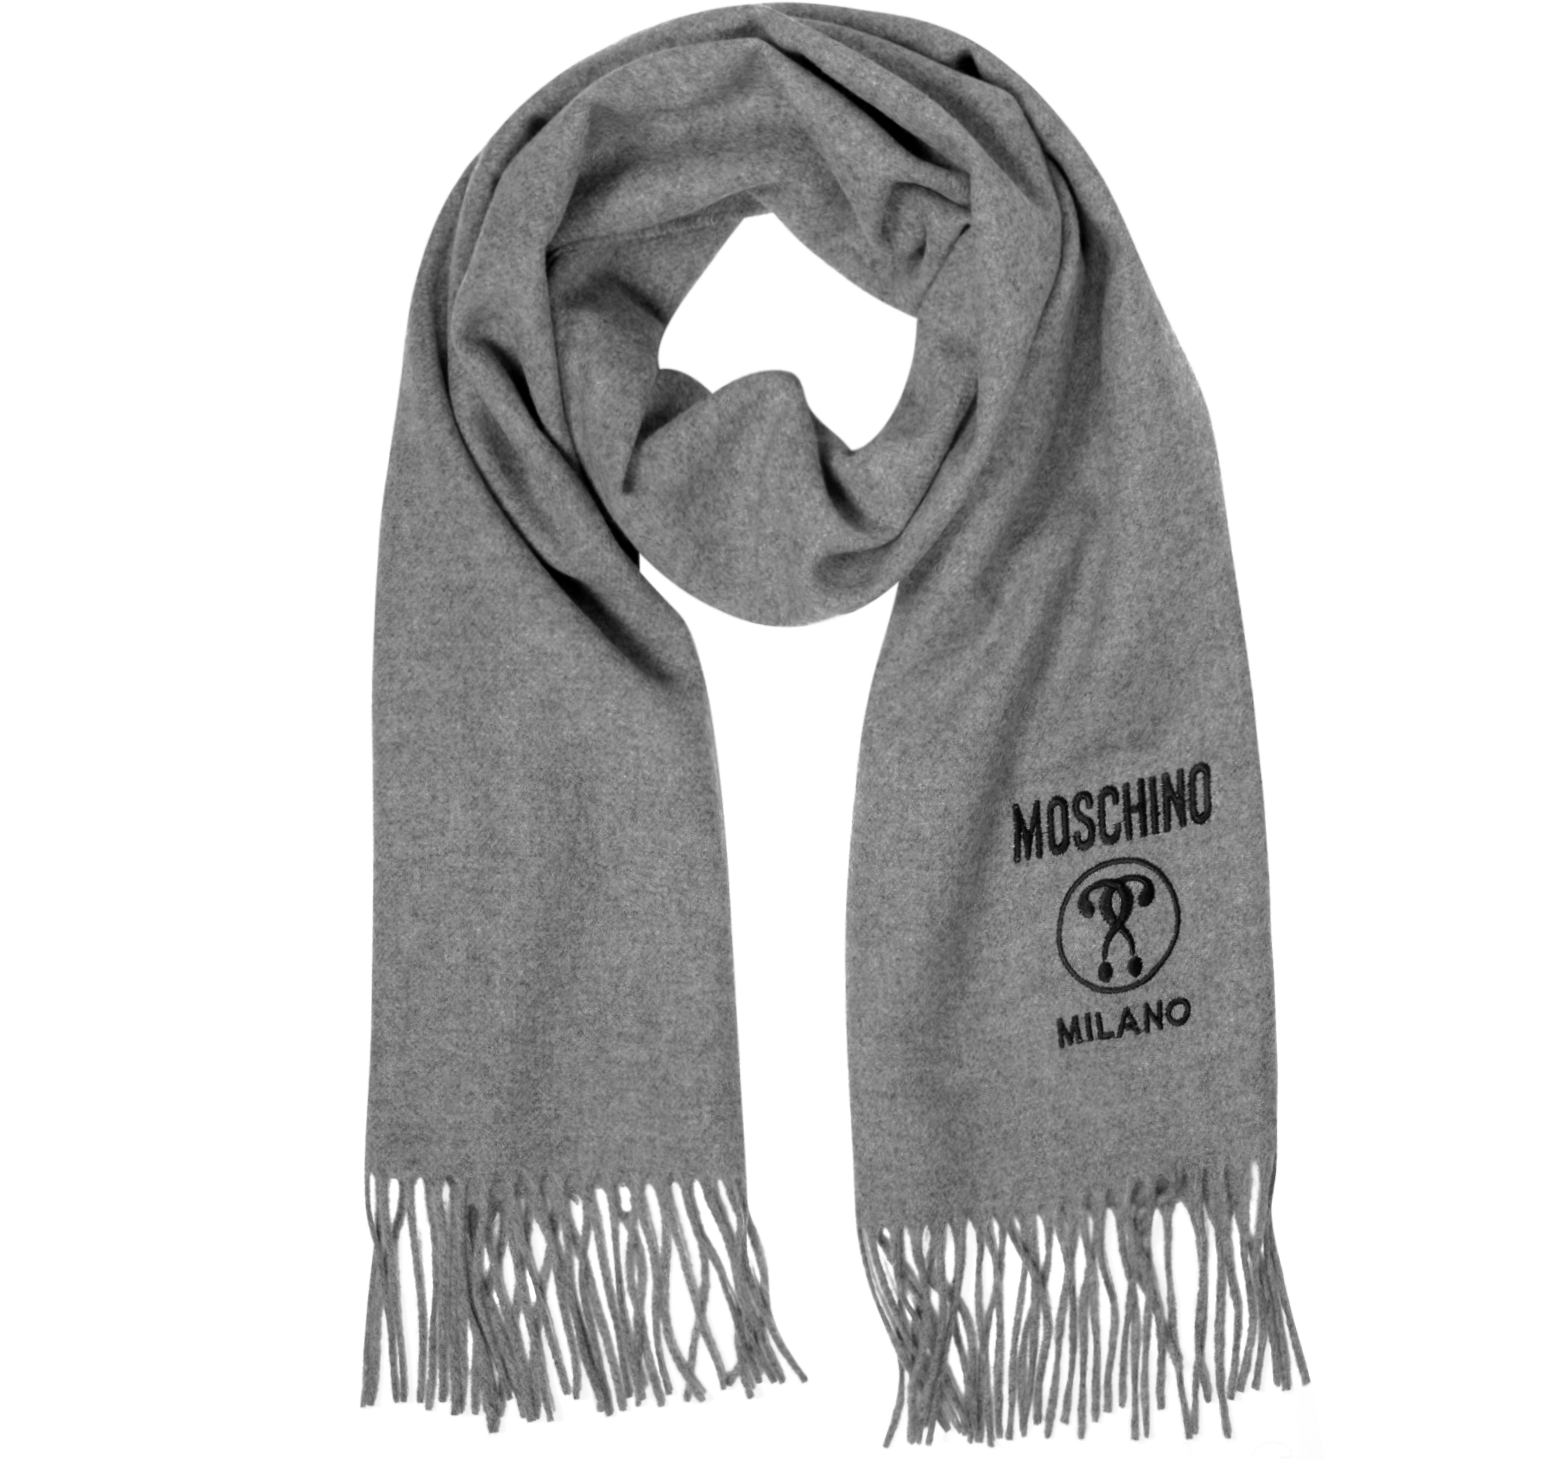 moschino milano scarf